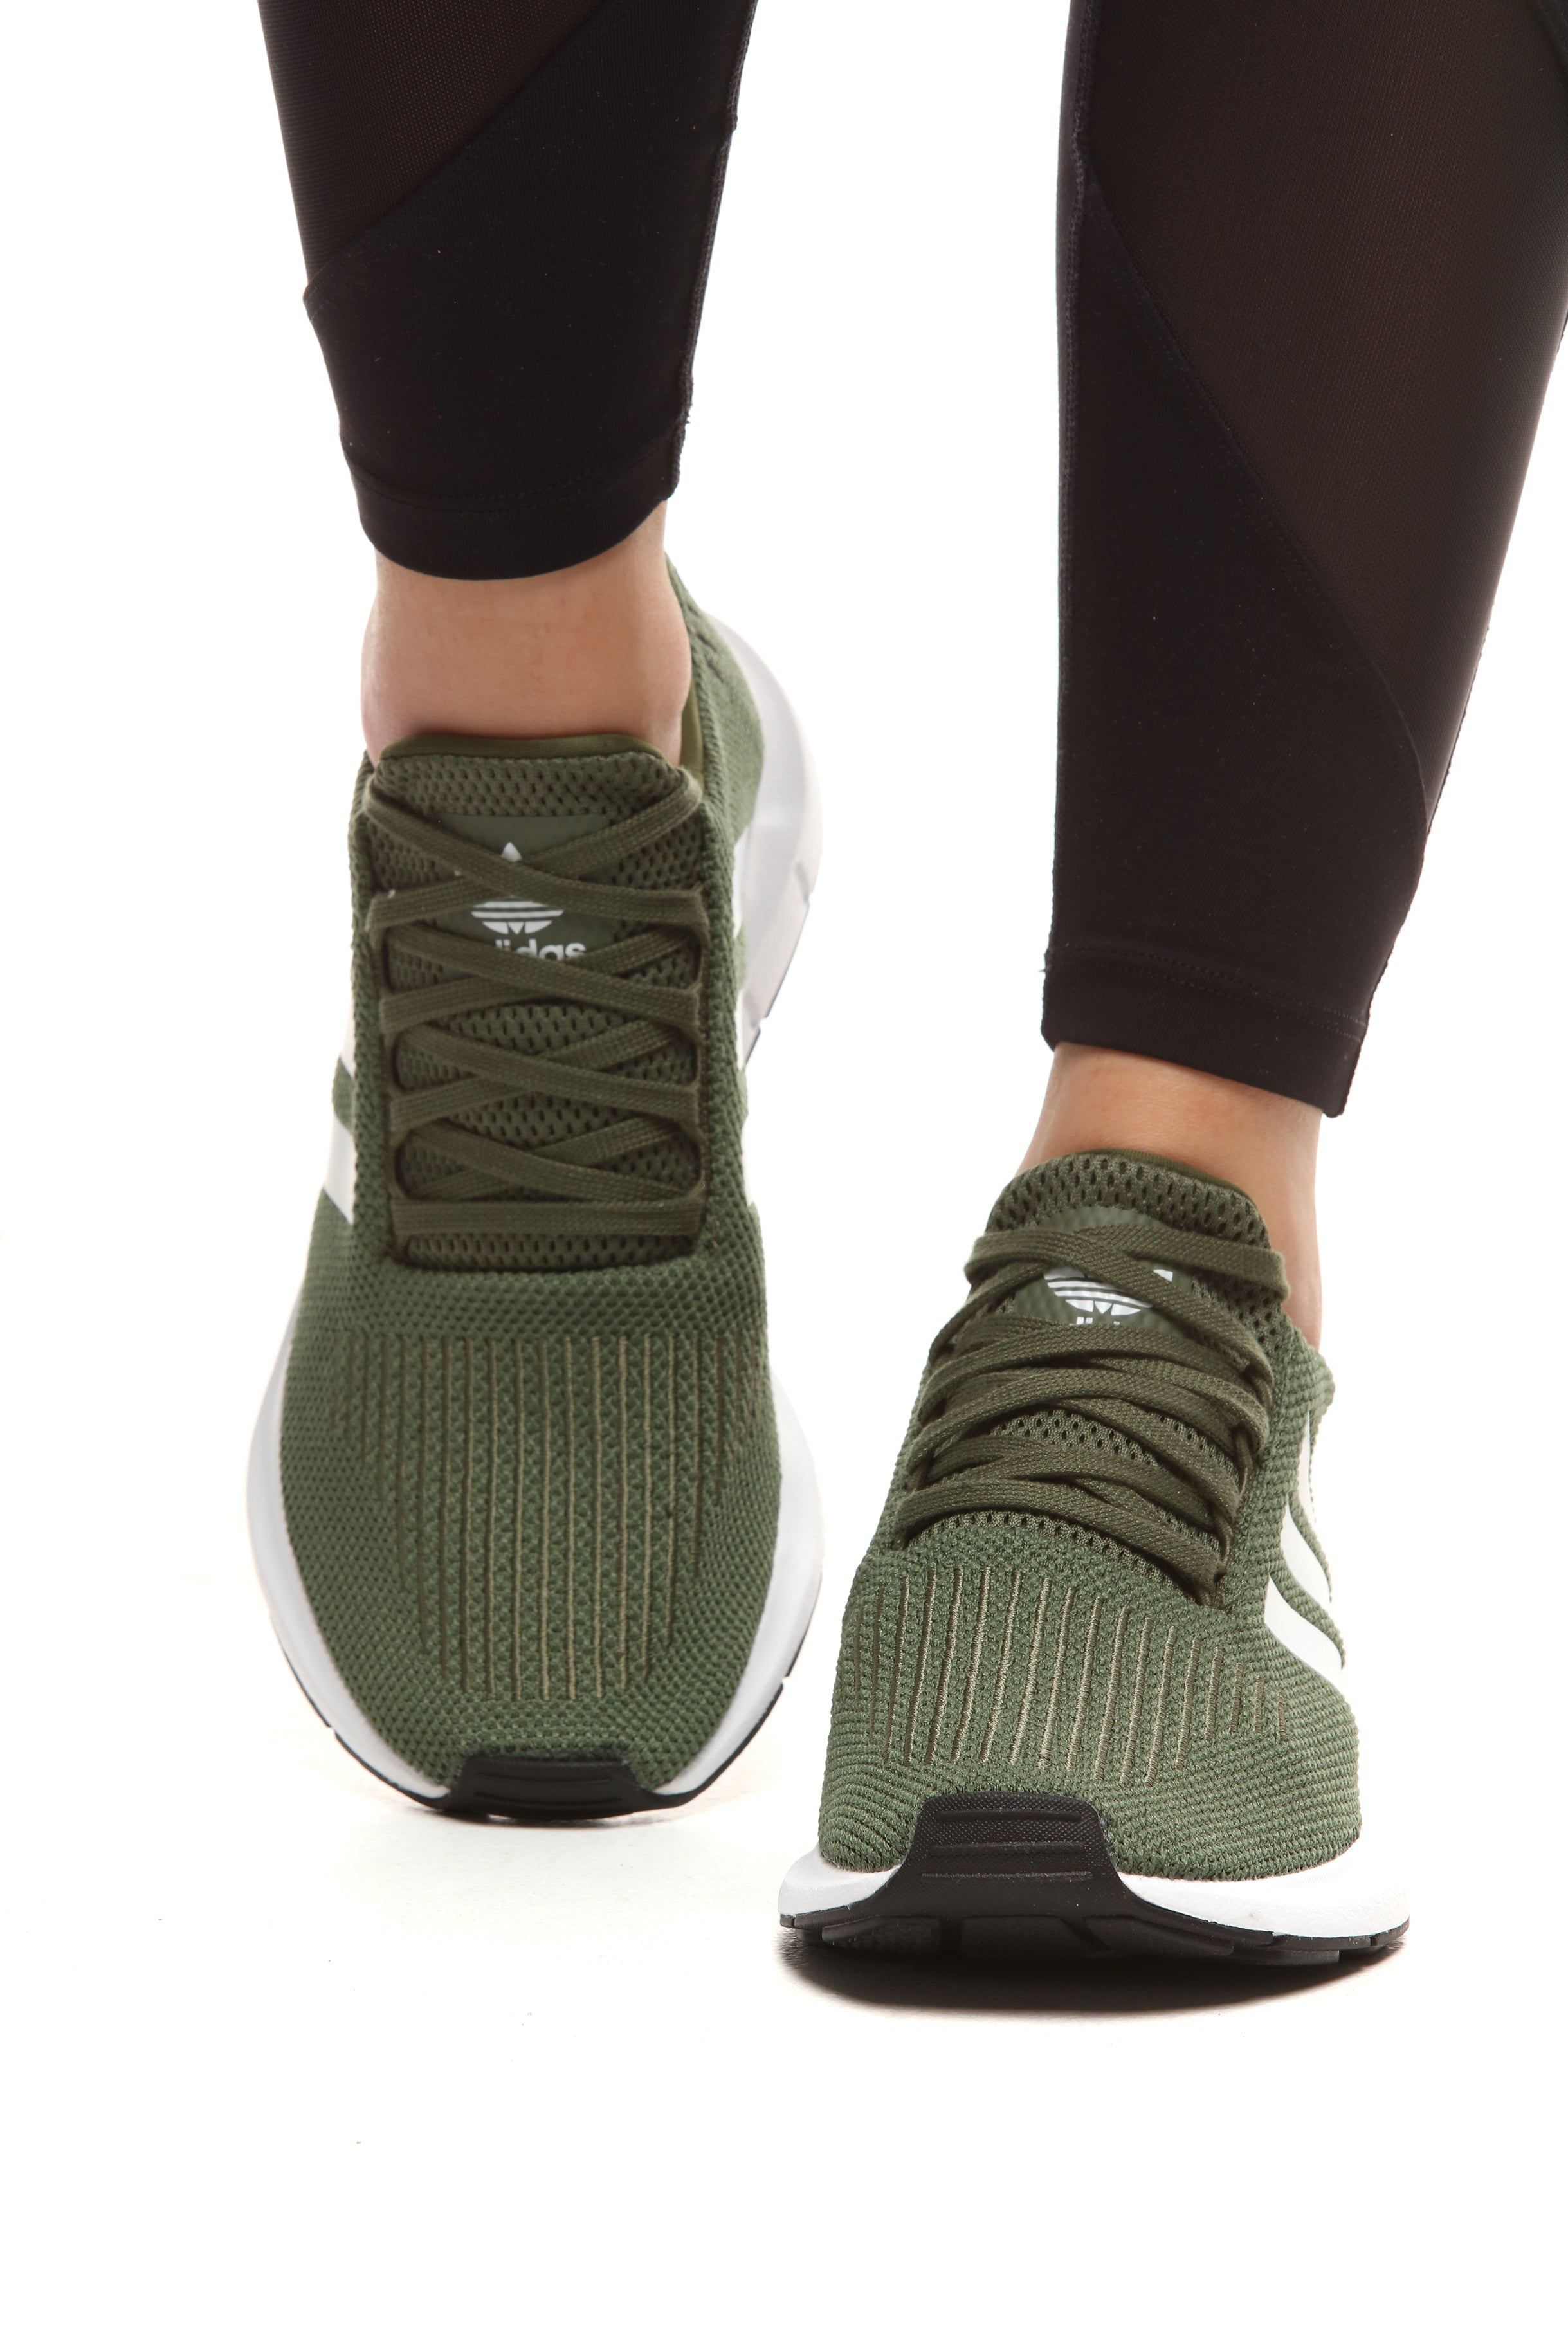 adidas swift run women's green